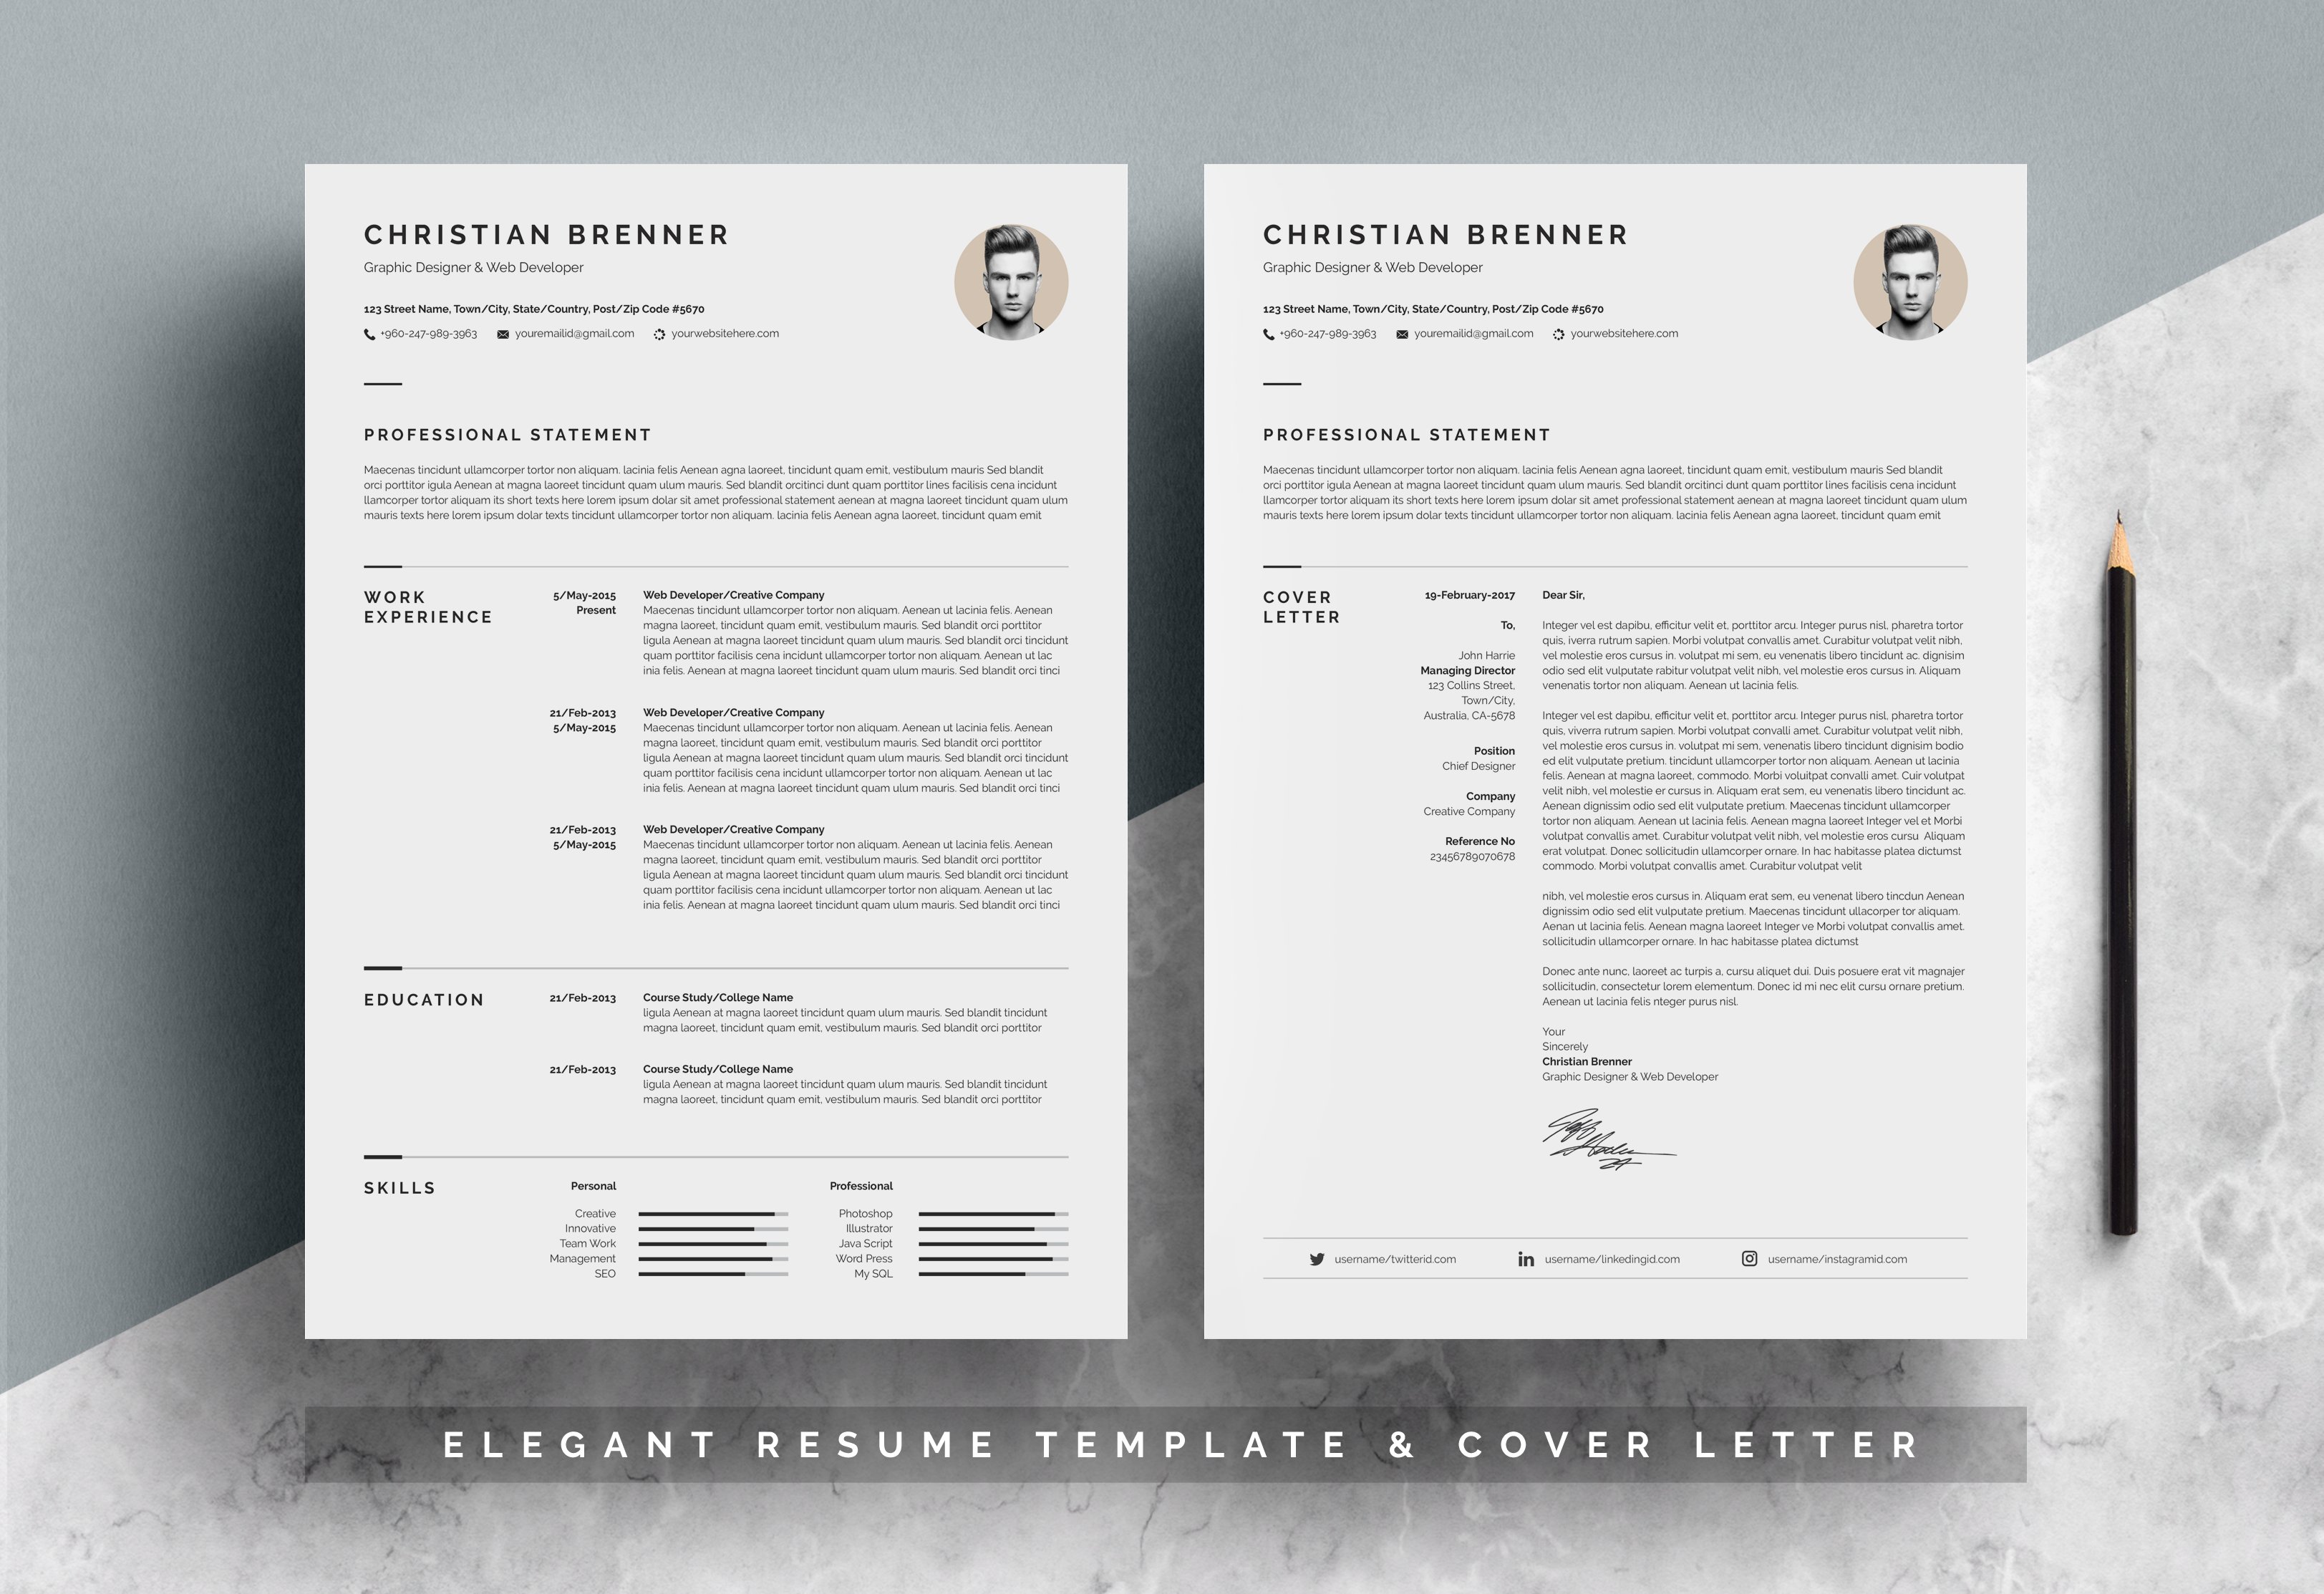 Elegant Resume Template preview image.